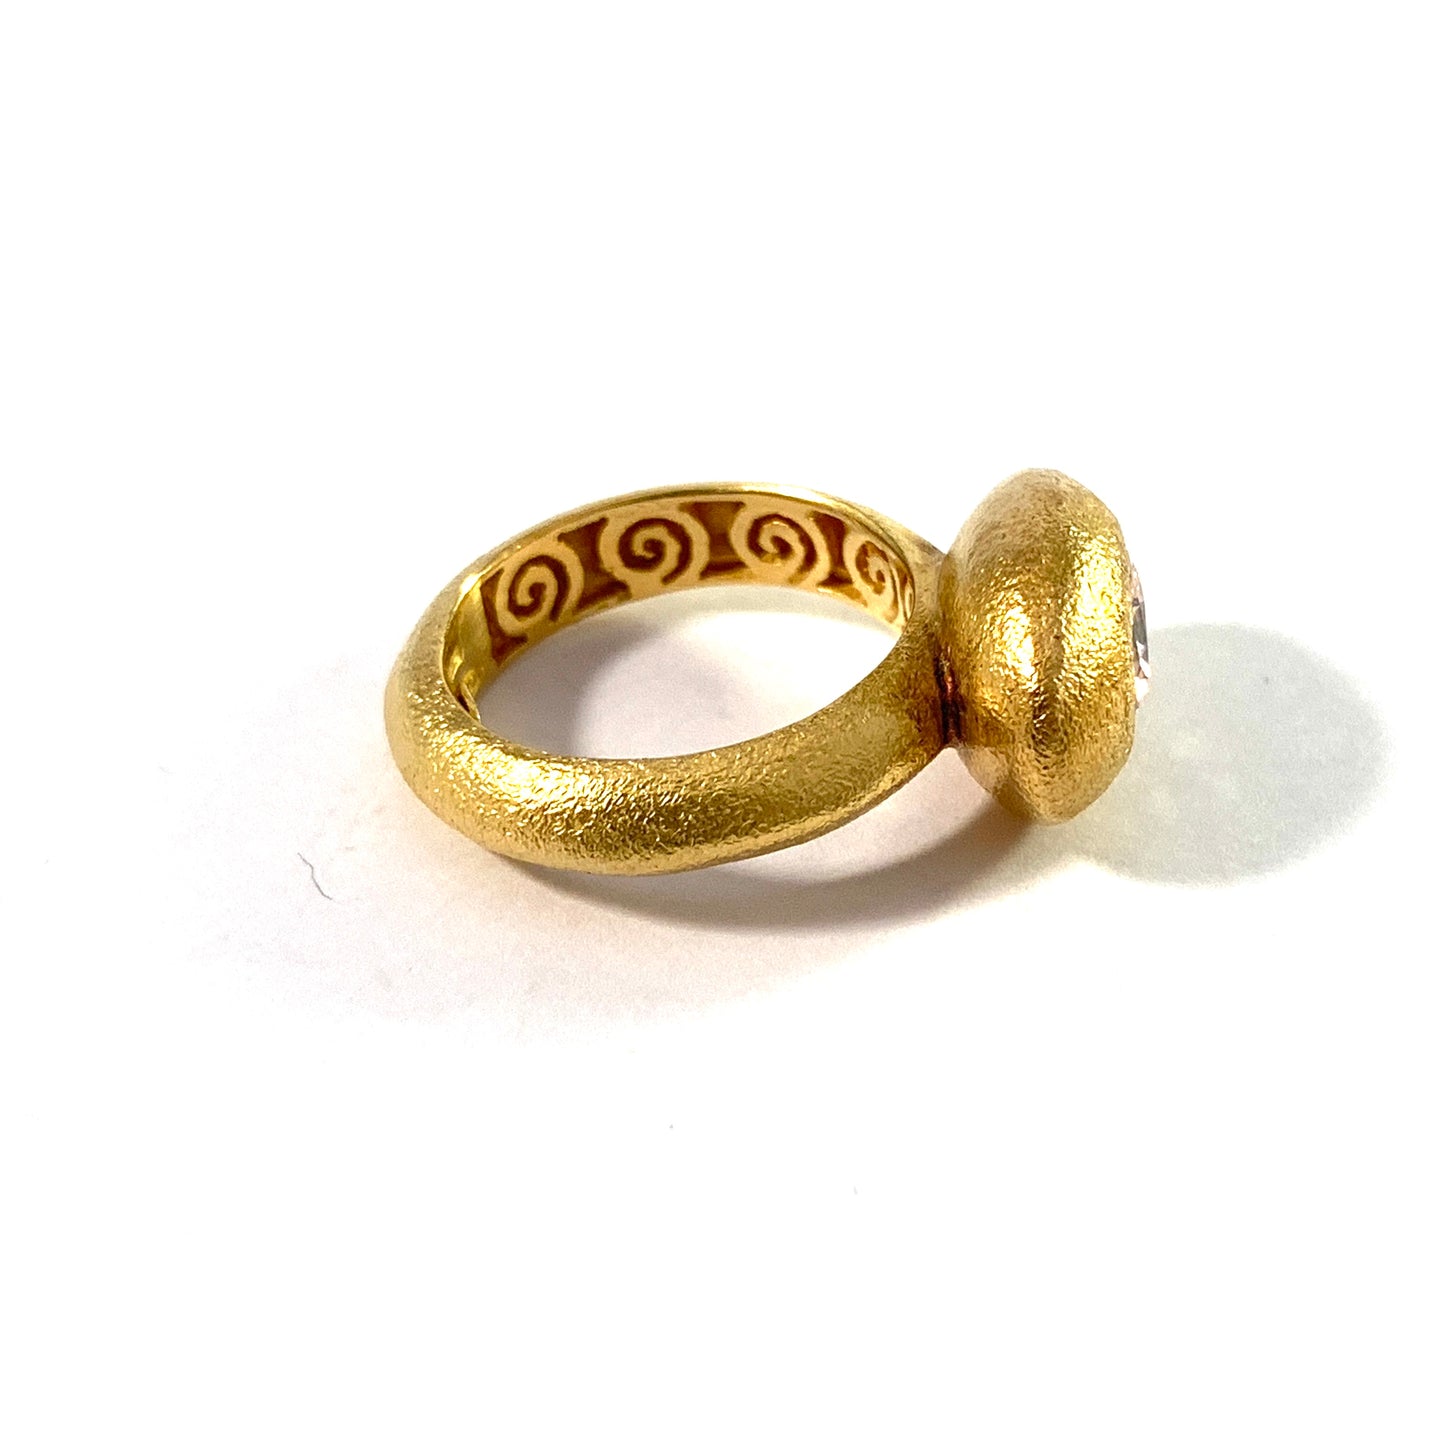 Paola Ferro, Milano, Italy. Vintage 18k Gold Pink Tourmaline Ring.